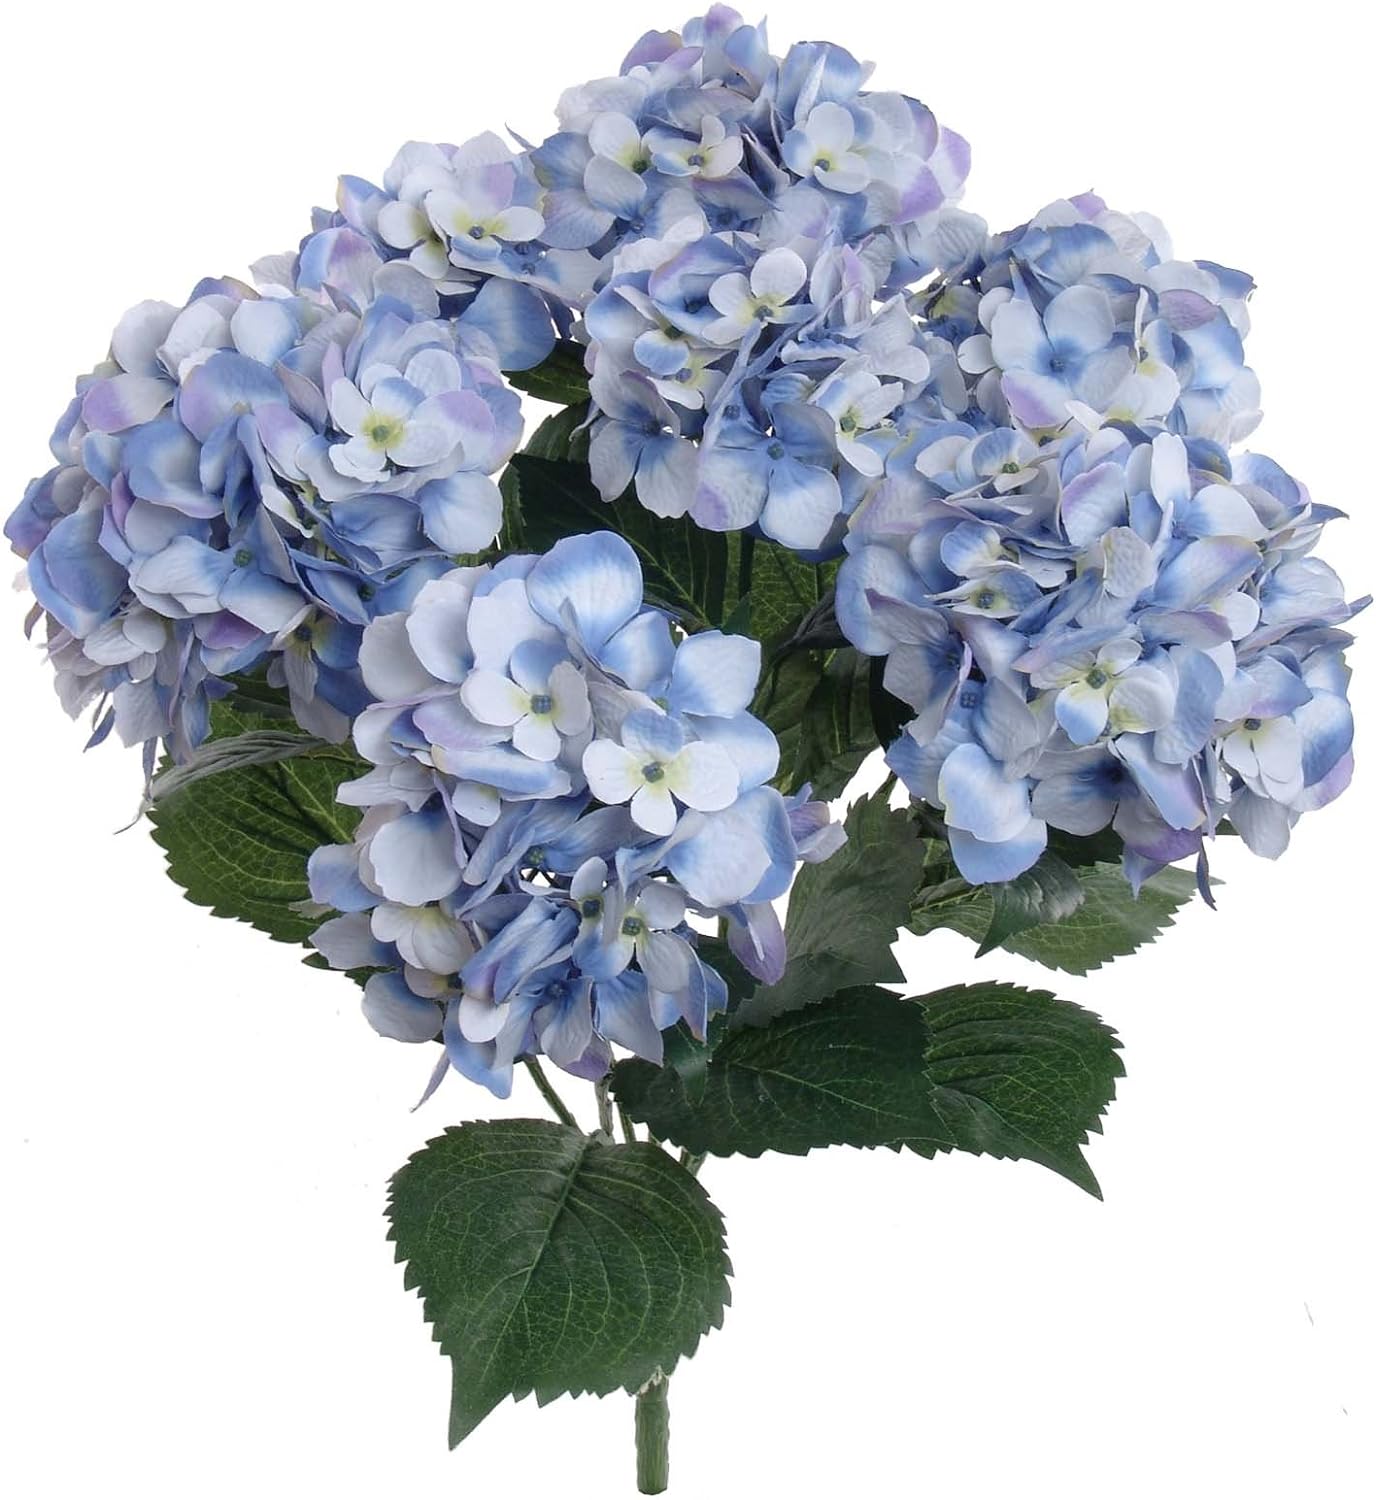 Designer Blue Hydrangea Silk Flowers, UV Resistant Indoor & Outdoor Bush, Seven Large Hydrangeas Heads, Wedding, Centerpiece, Home, Event Dècor, Adjustable Stem (Two Pieces)